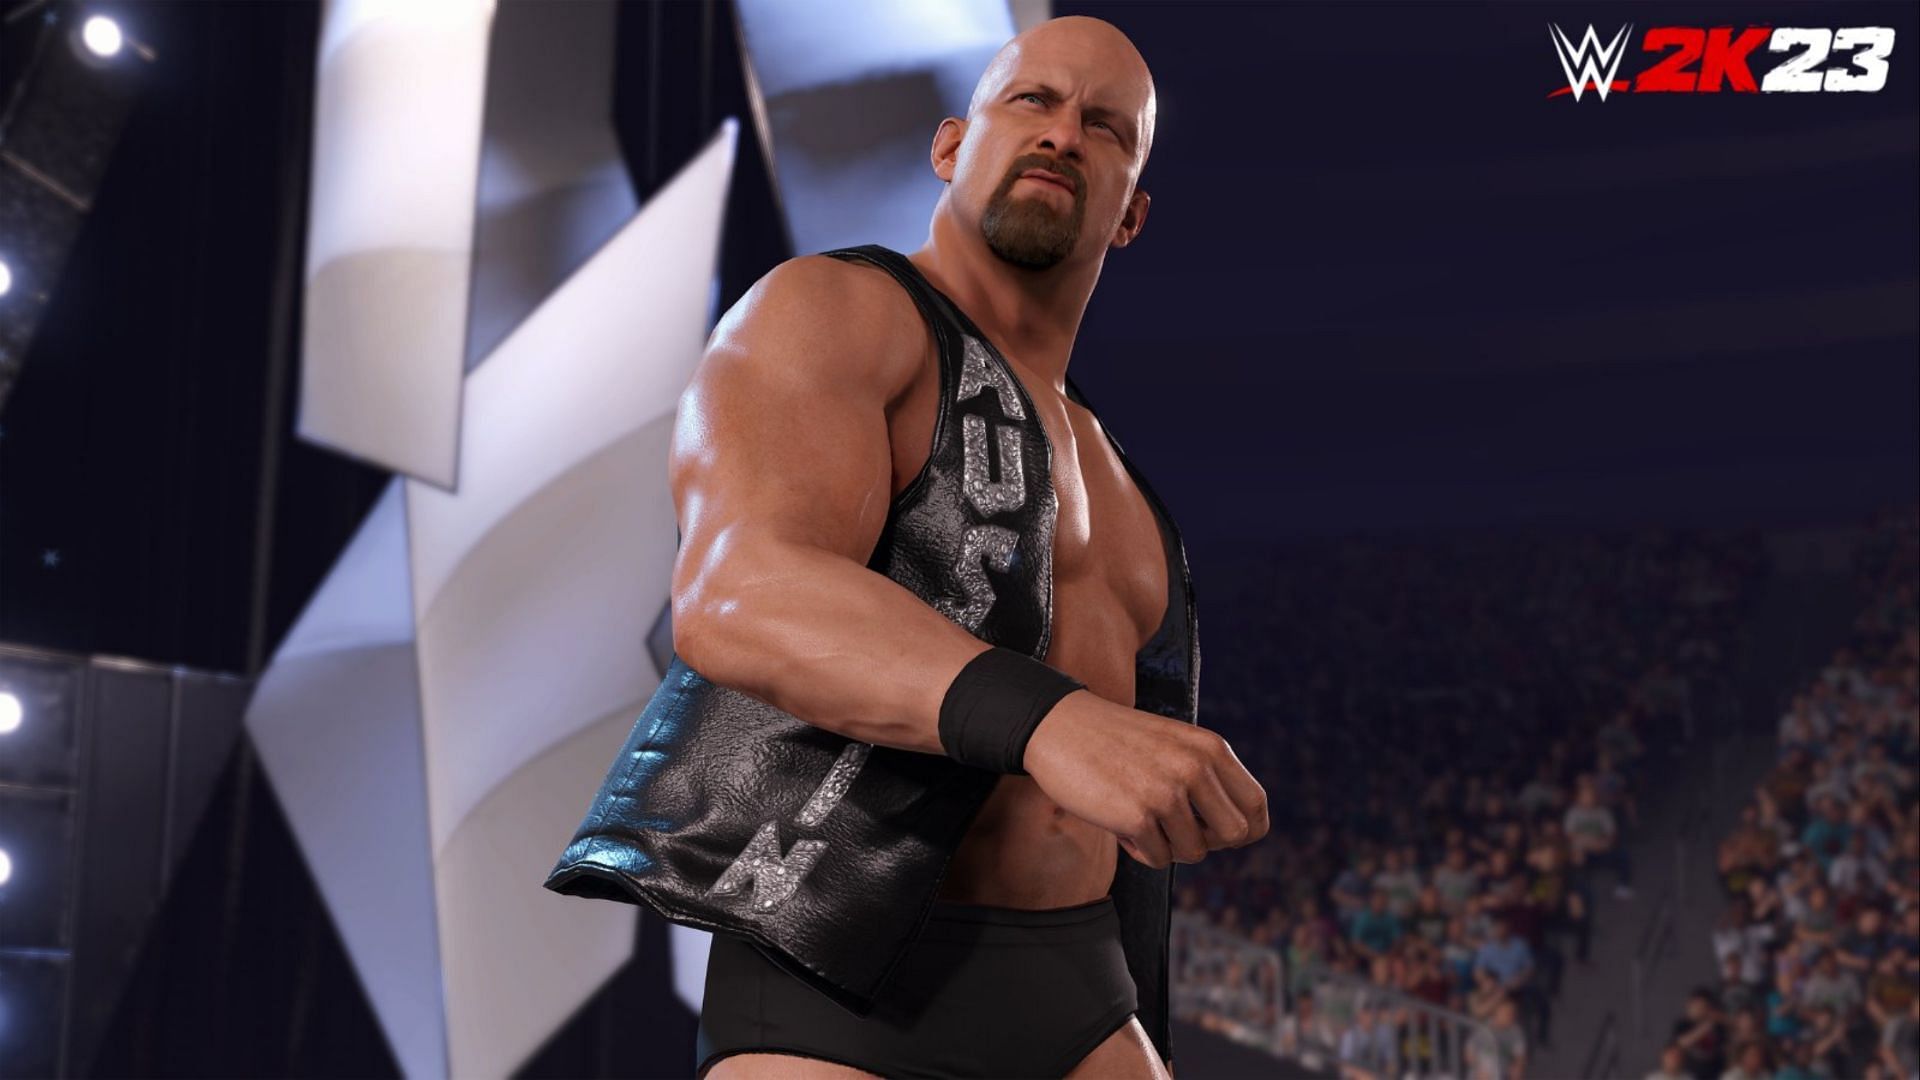 WWE 2K23 is set to release soon (Image via WWE)